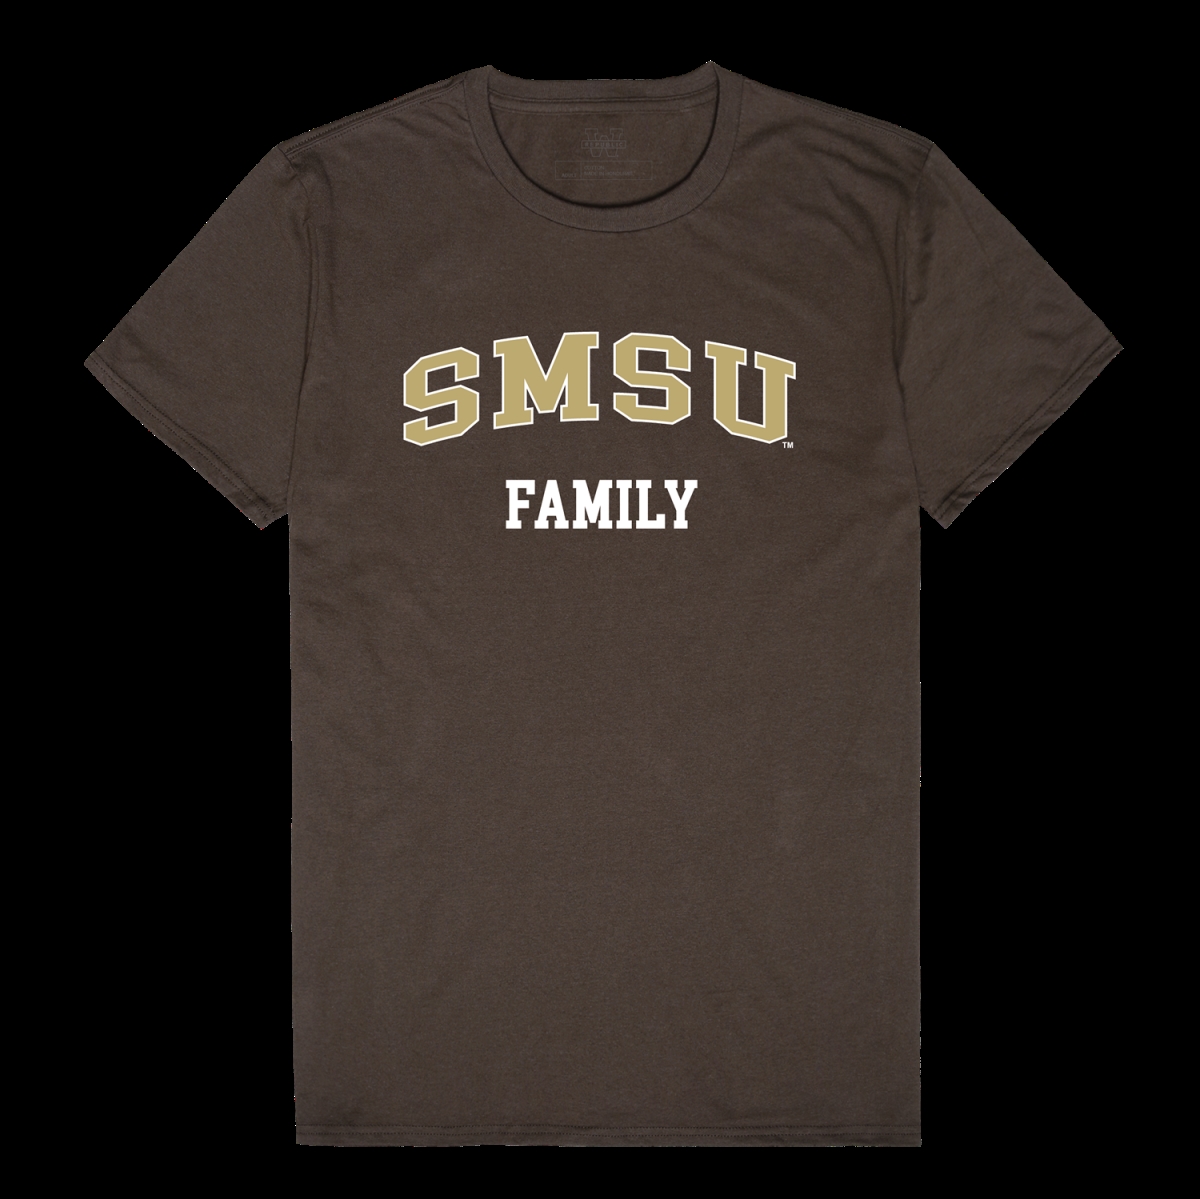 W Republic 571-674-BRN-04 Southwest Minnesota State University Mustangs Family T-Shirt&#44; Brown - Extra Large